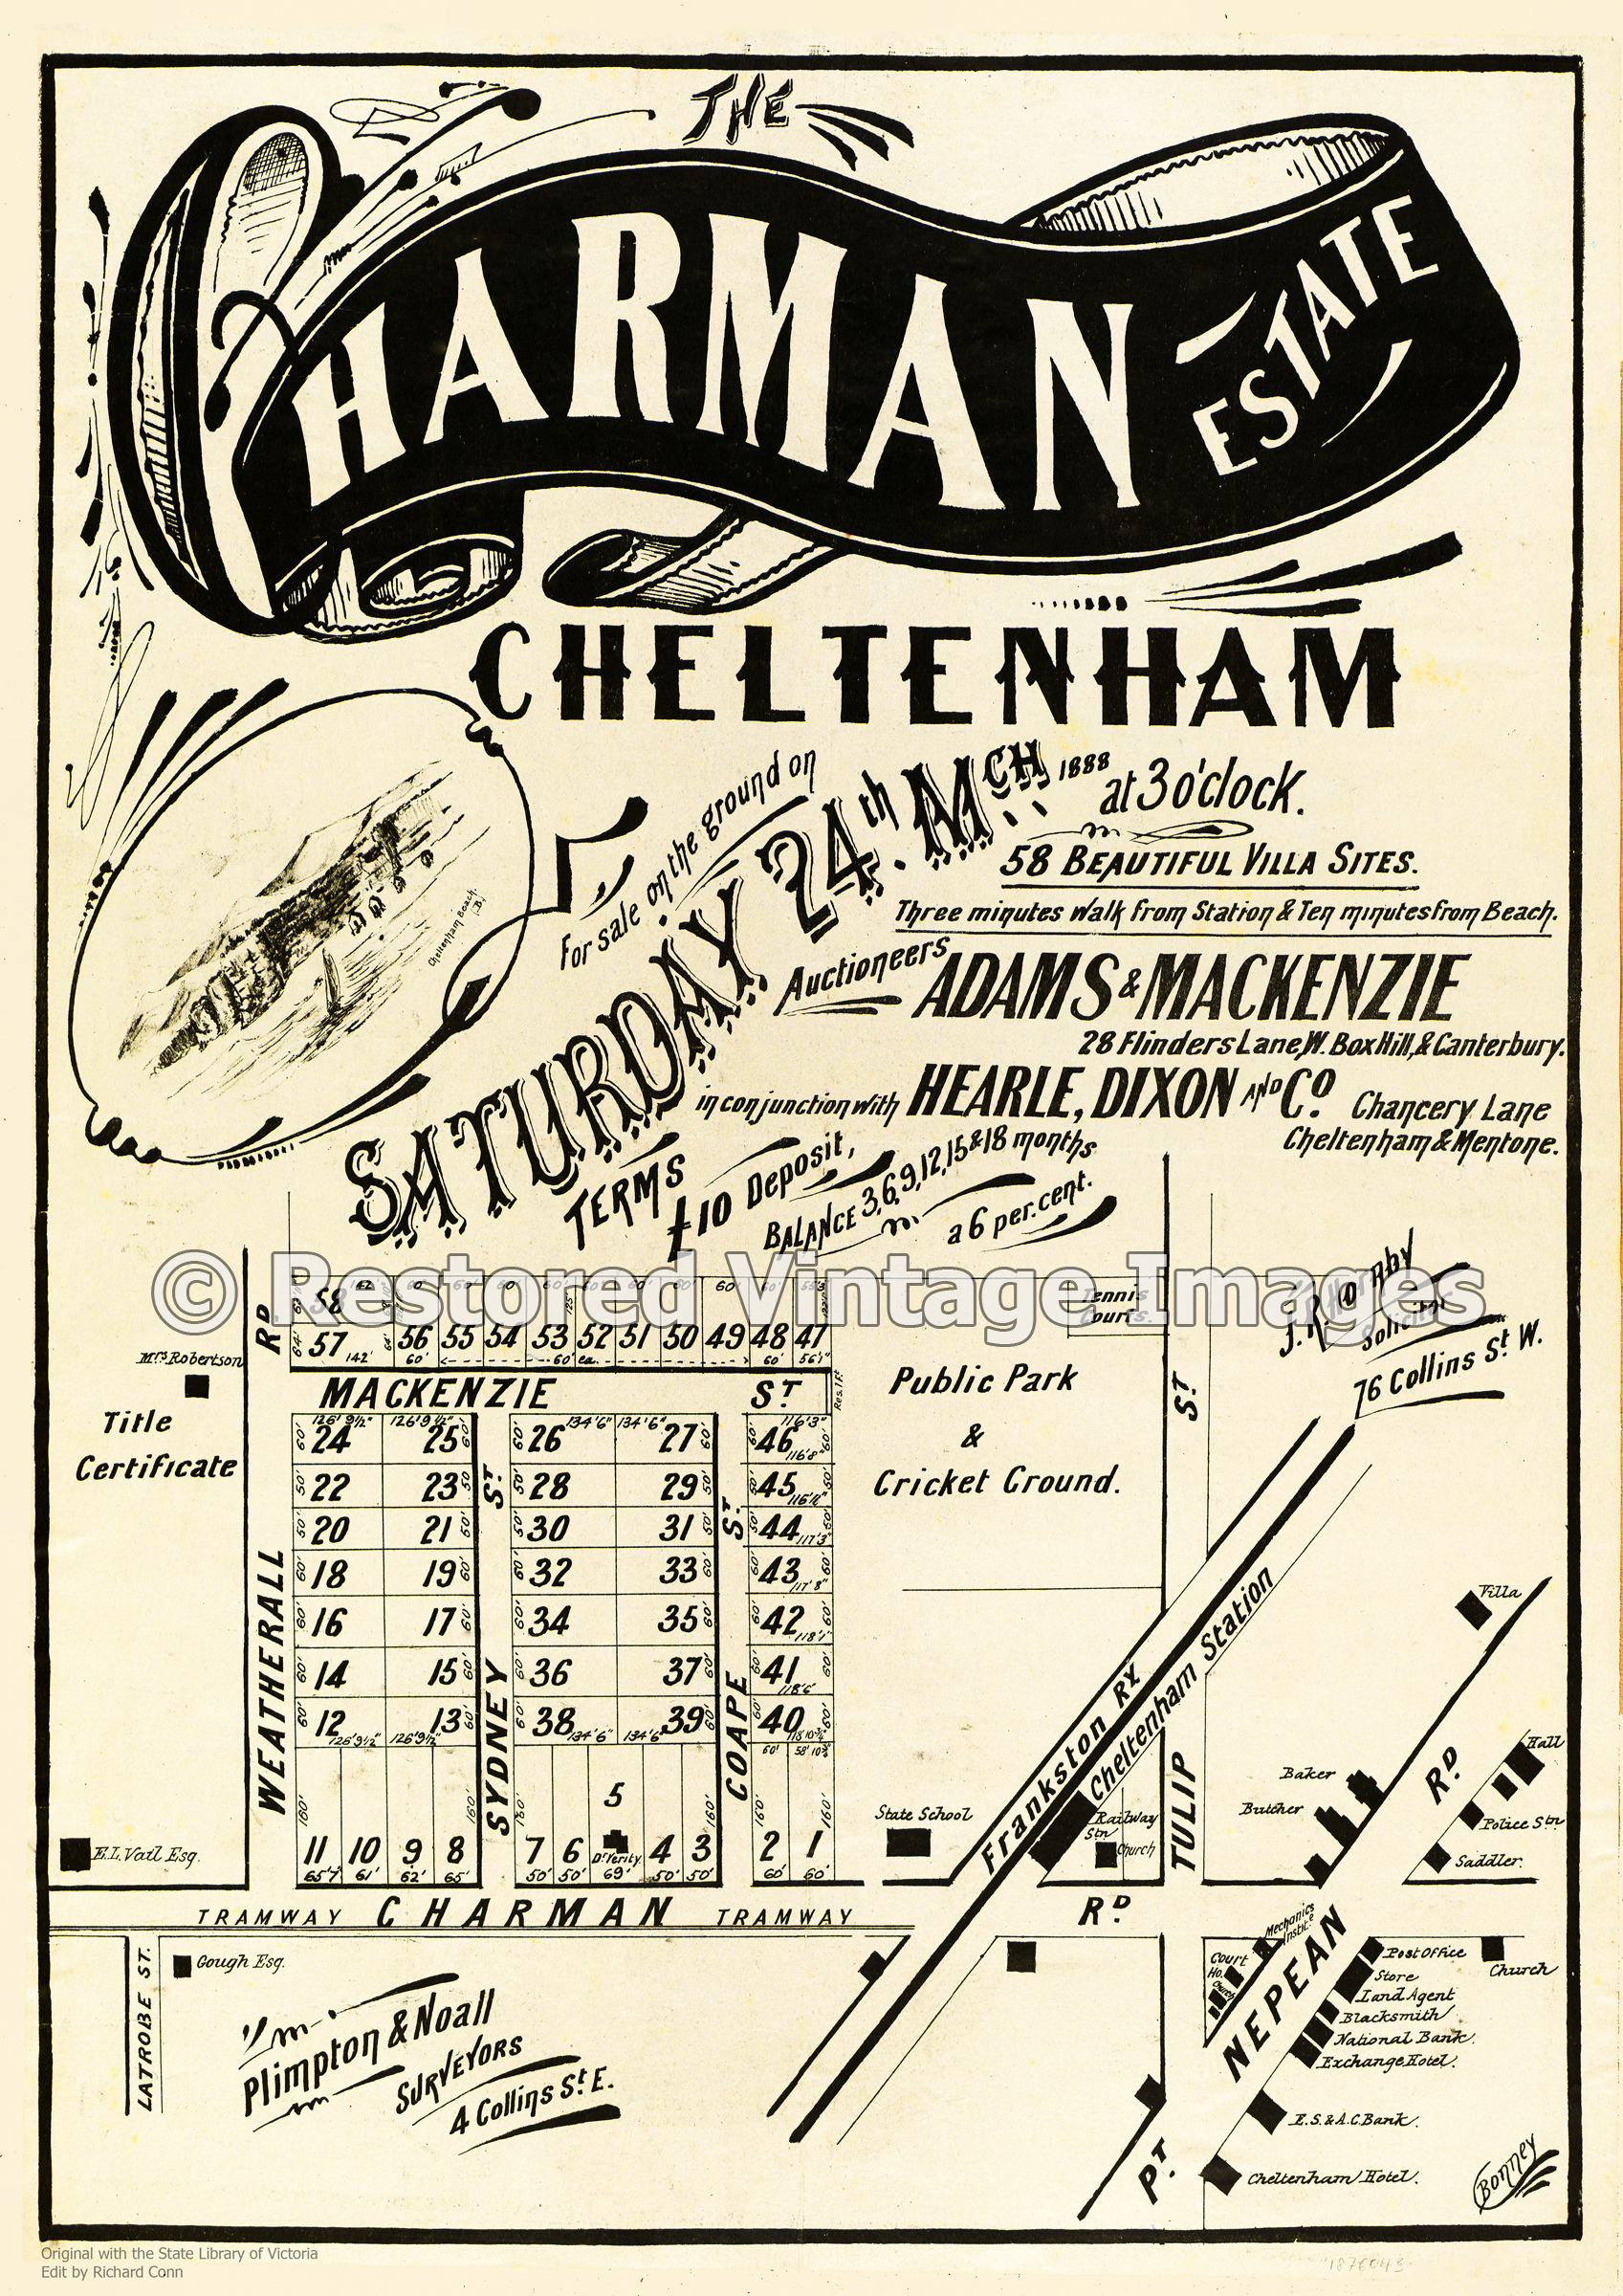 Charman Estate 24th March 1888 – Cheltenham